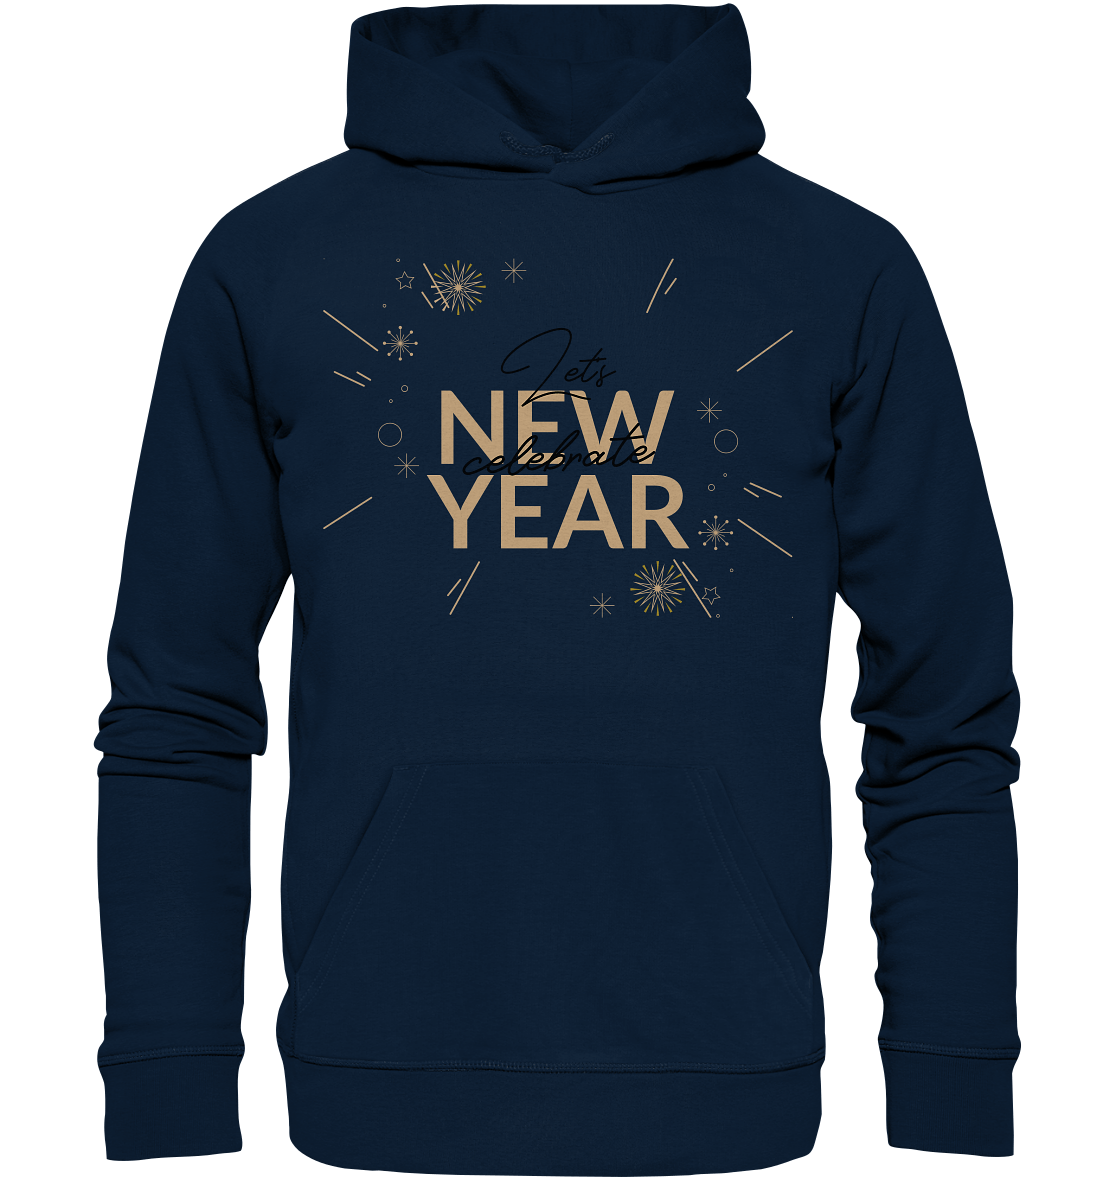 Silvester Kapuzenpullover in navy blau mit Lettering  Happy New Year Let's celebrate